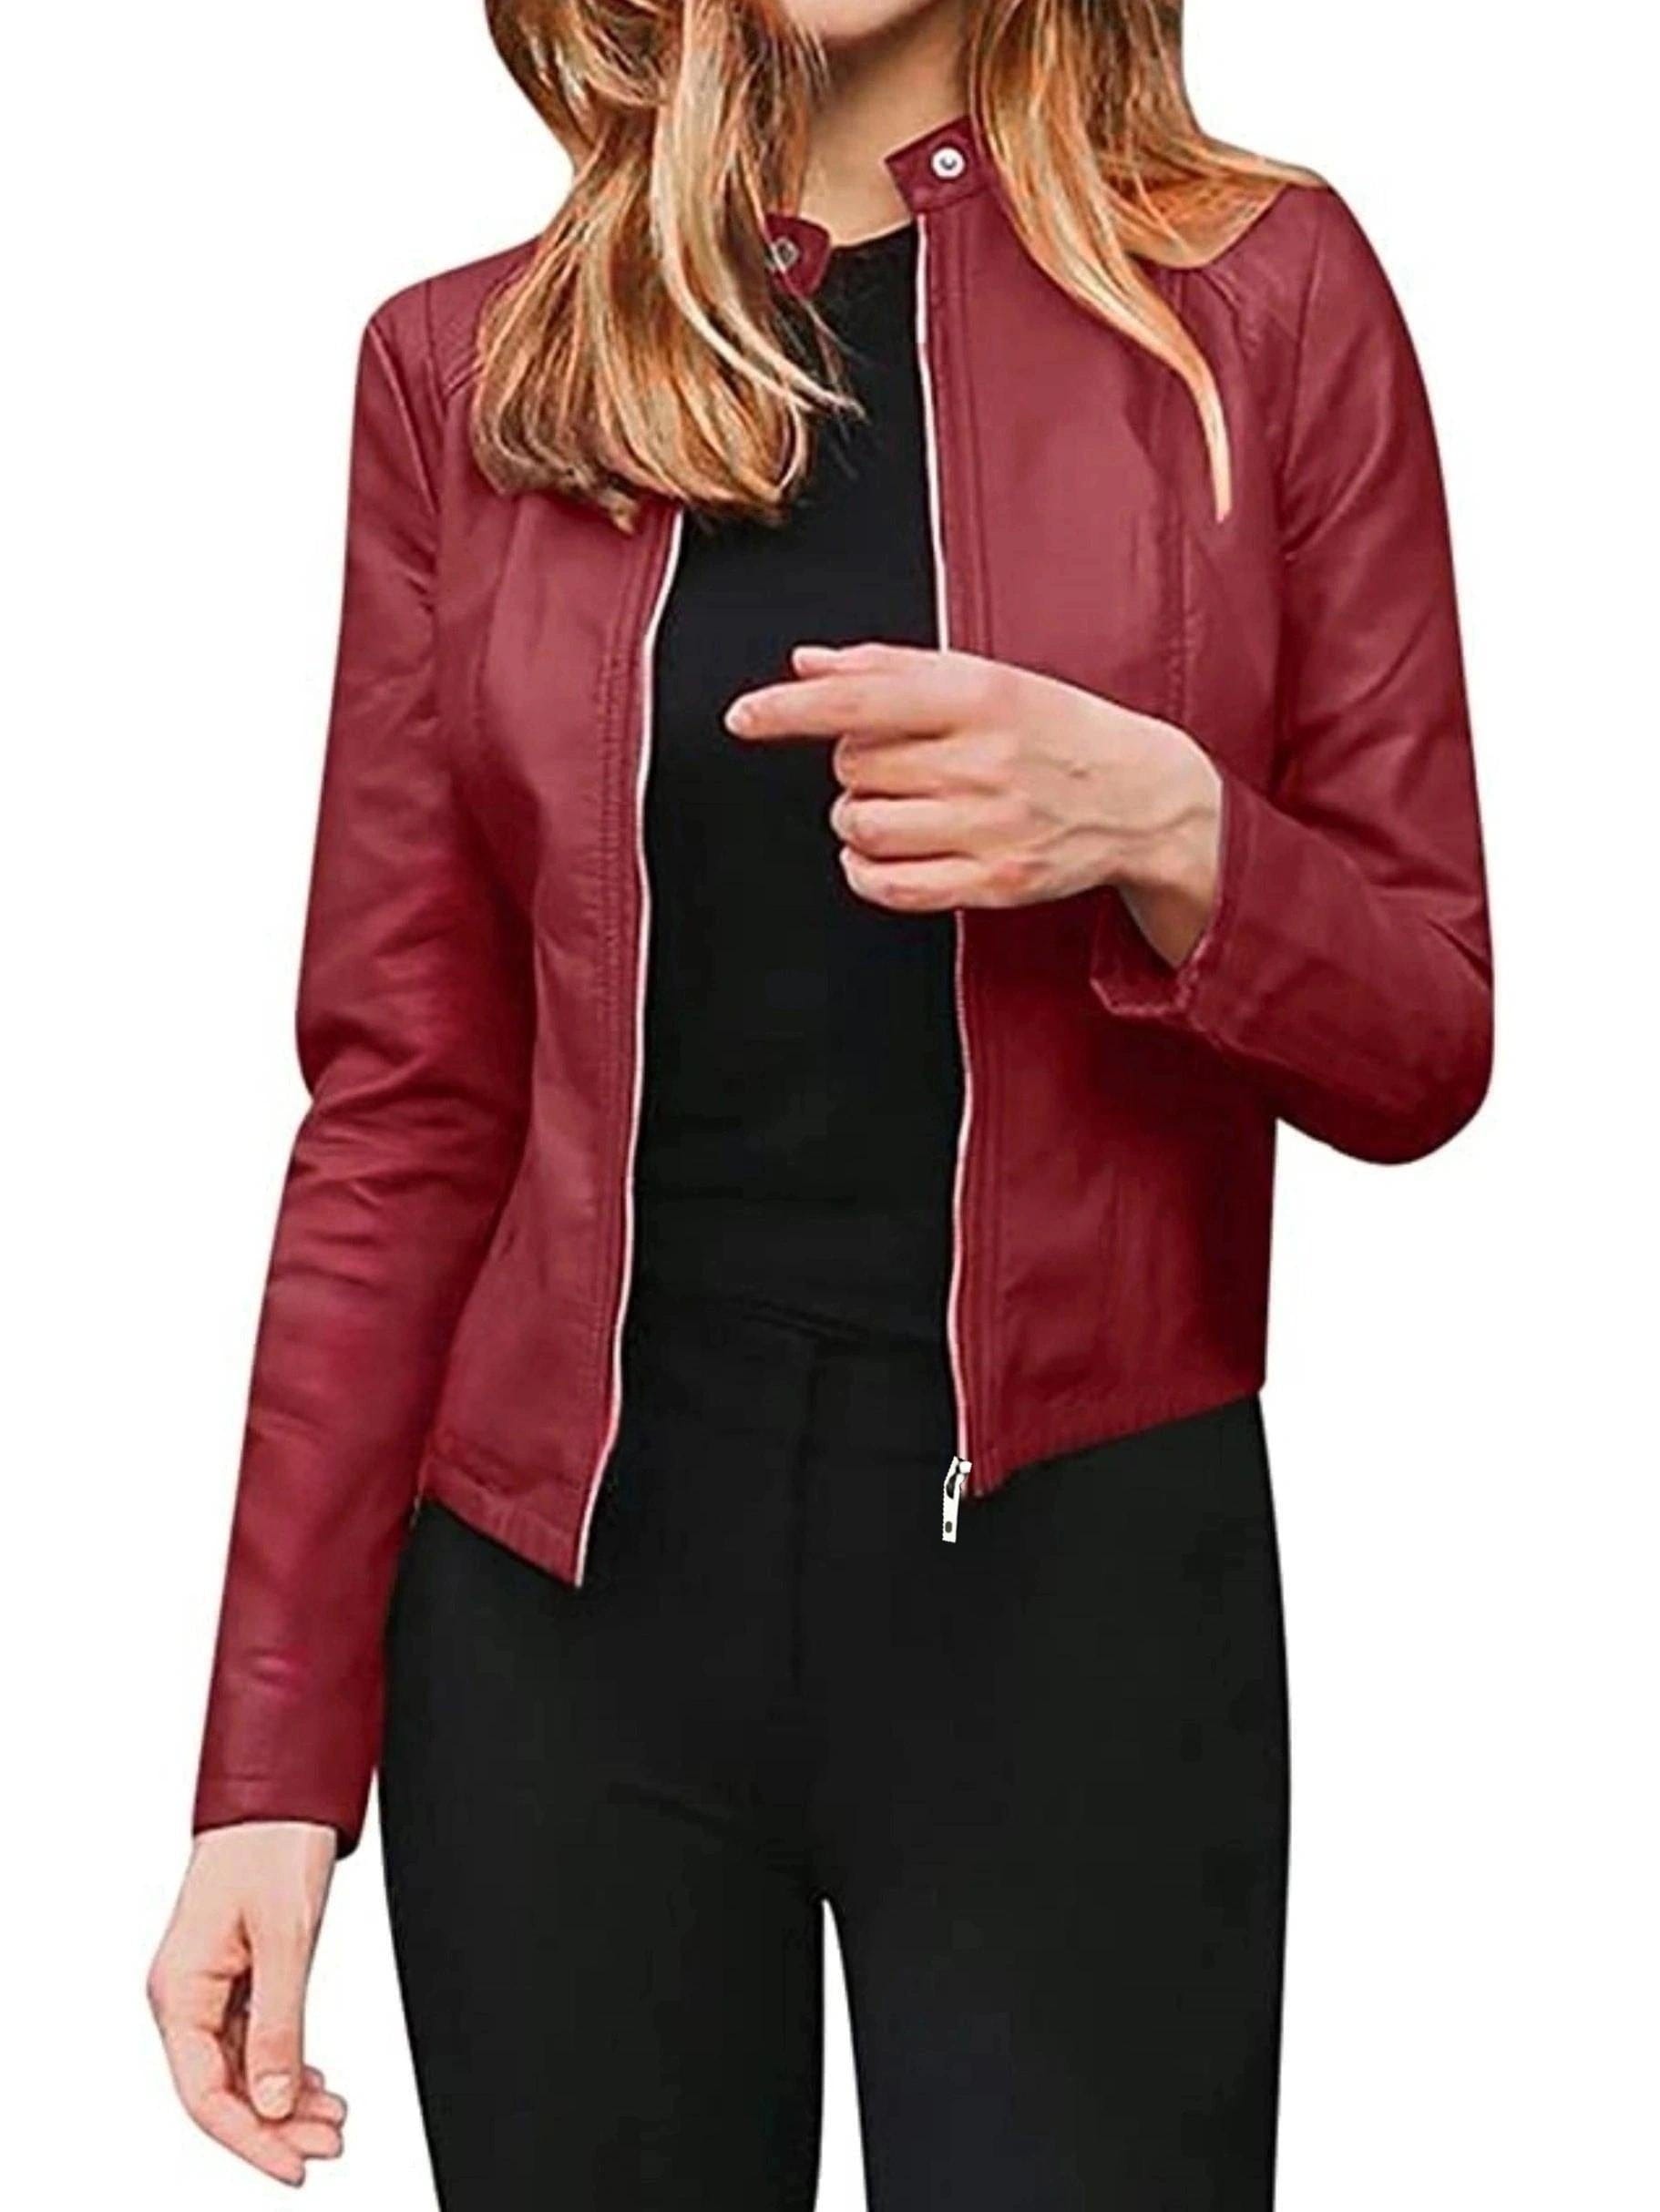 MsDressly Jackets Solid Lightweight Faux Leather Zipper Casual Crop Jacket